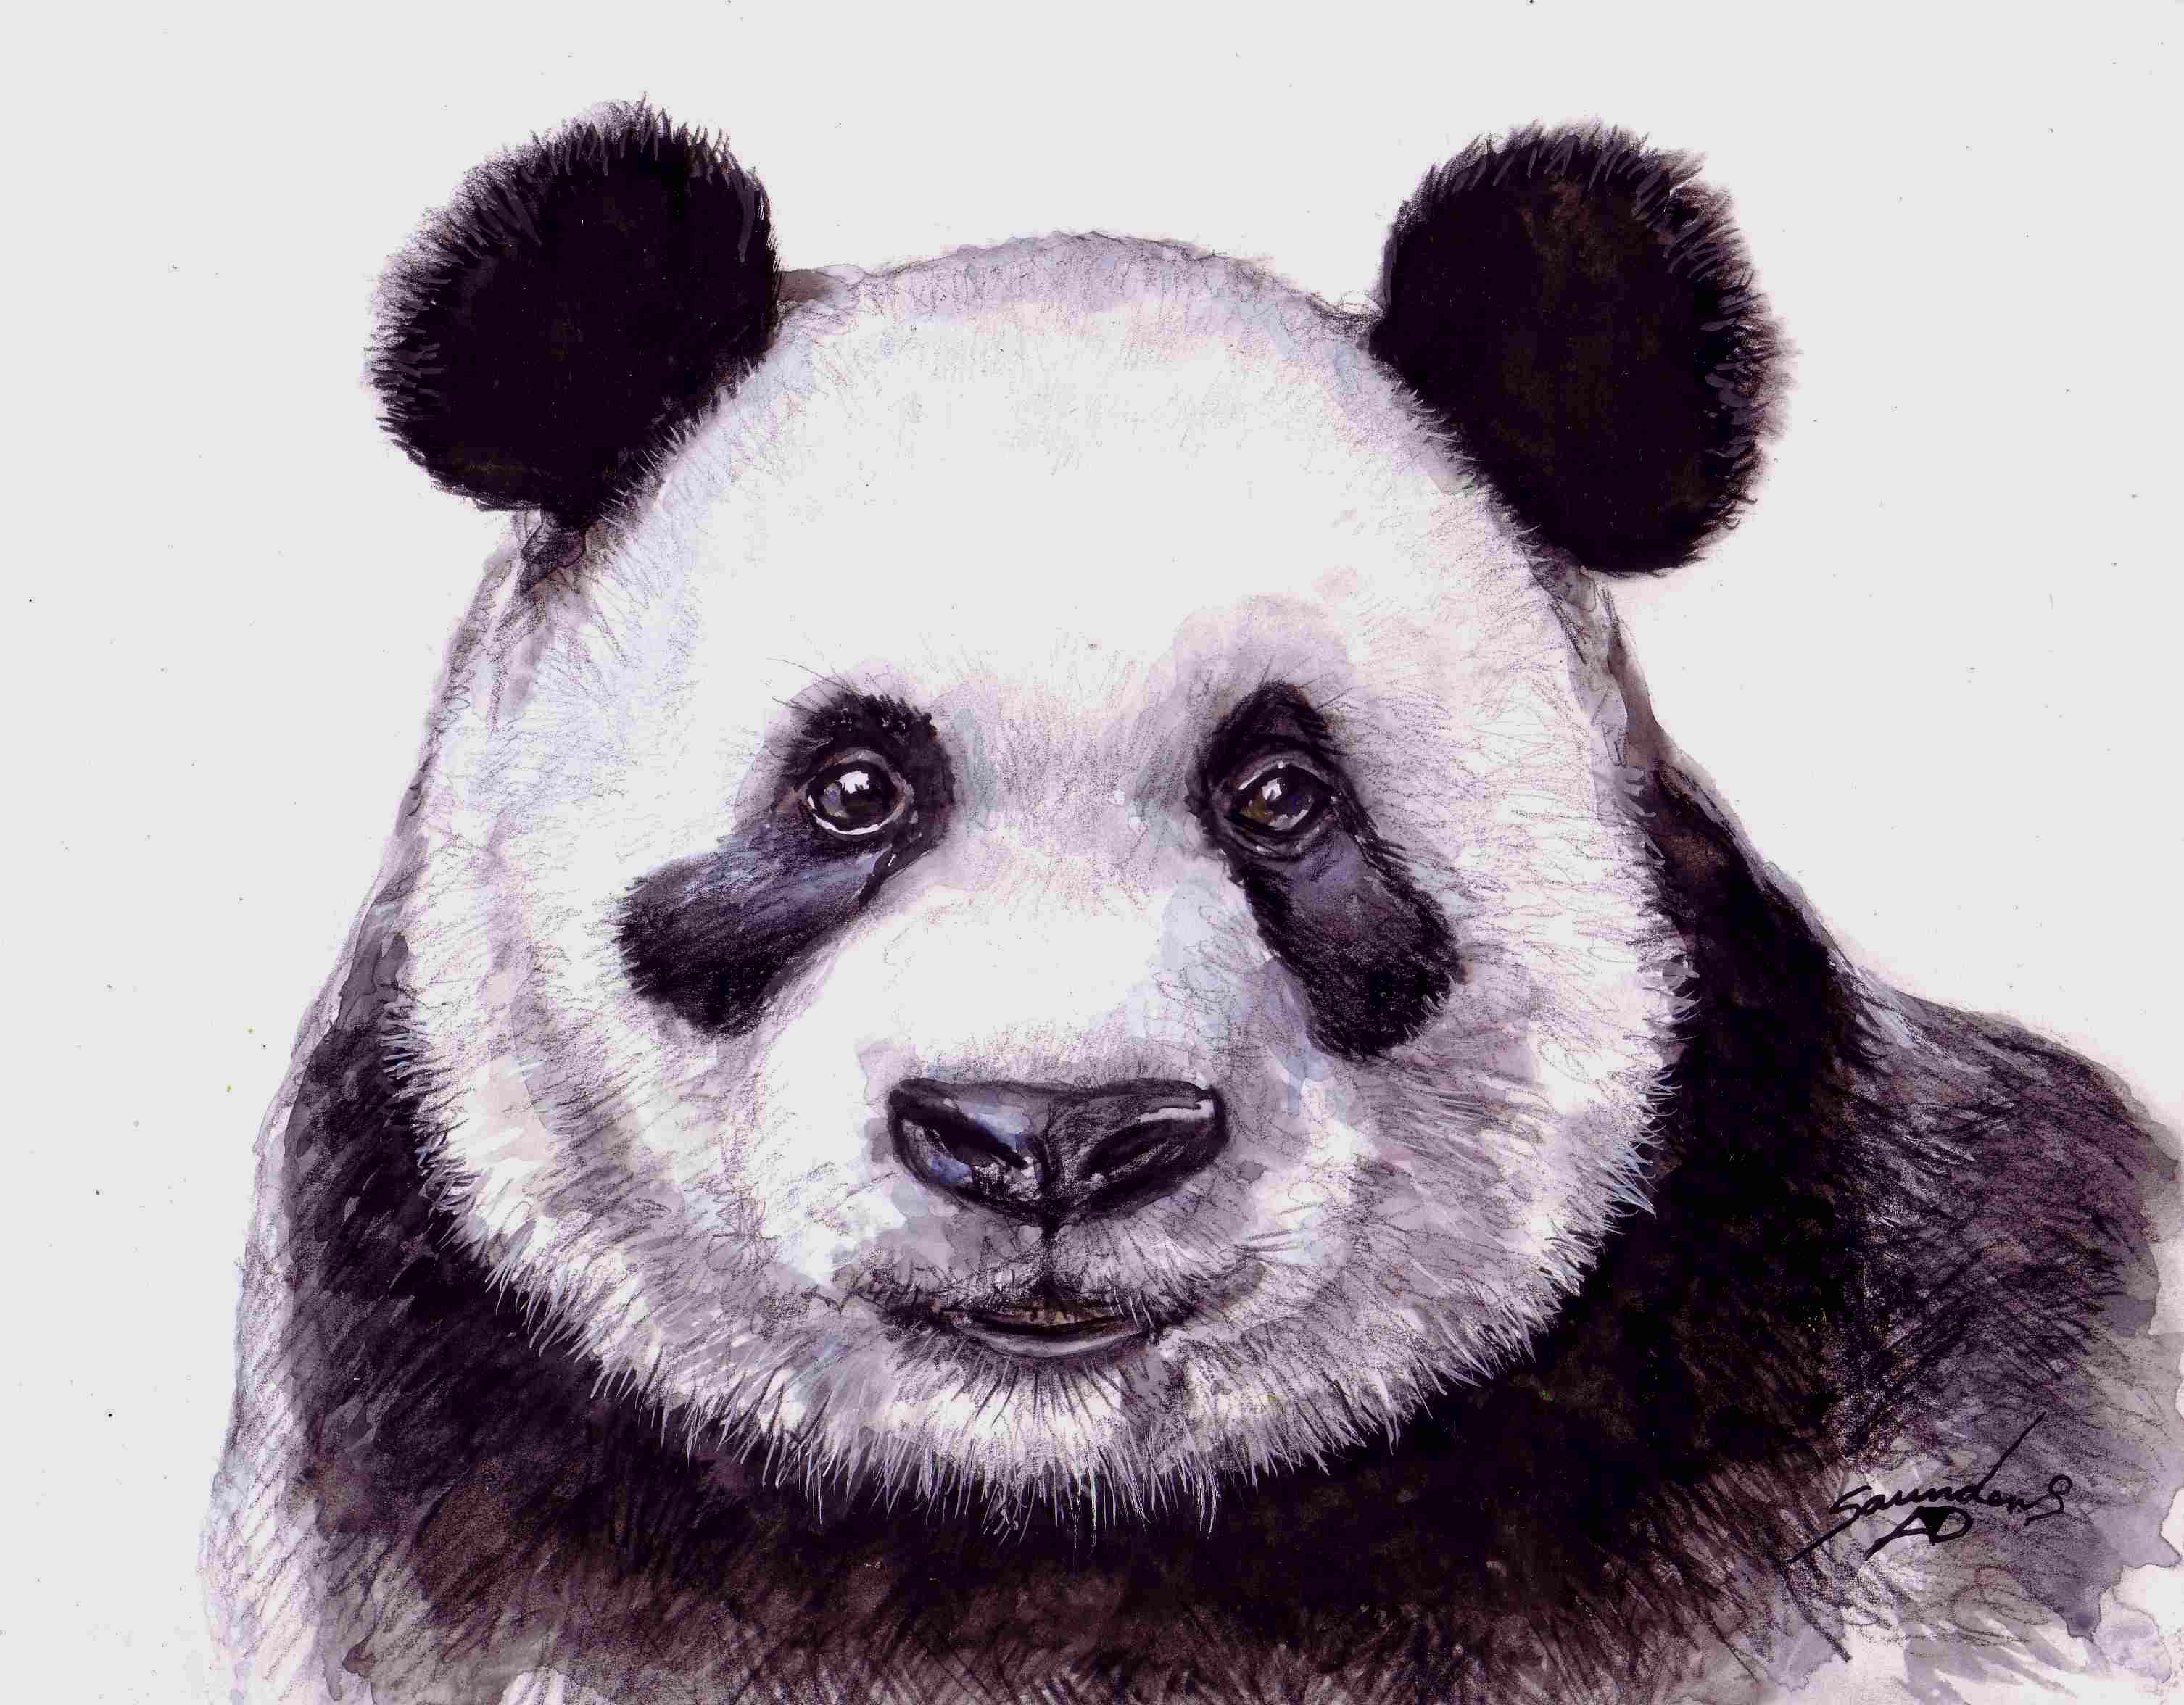 Panda Bear Painting at PaintingValley.com | Explore collection of Panda ...